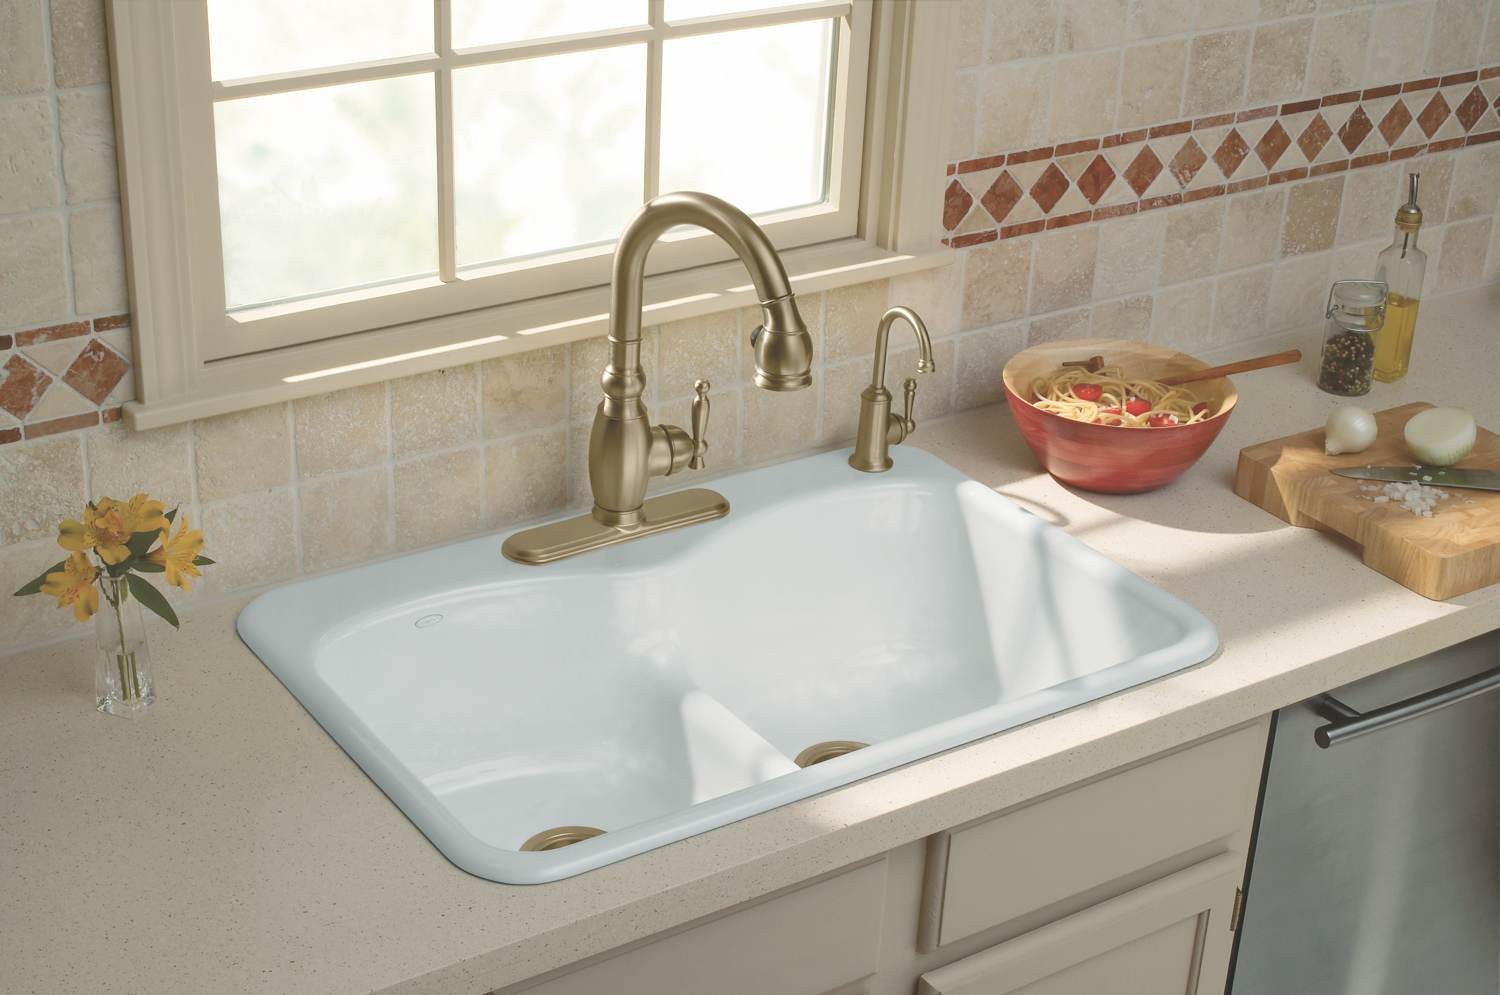 Kohler White Kitchen Sink
 KOHLER K 6626 4 0 Langlade Smart Divide Self Rimming